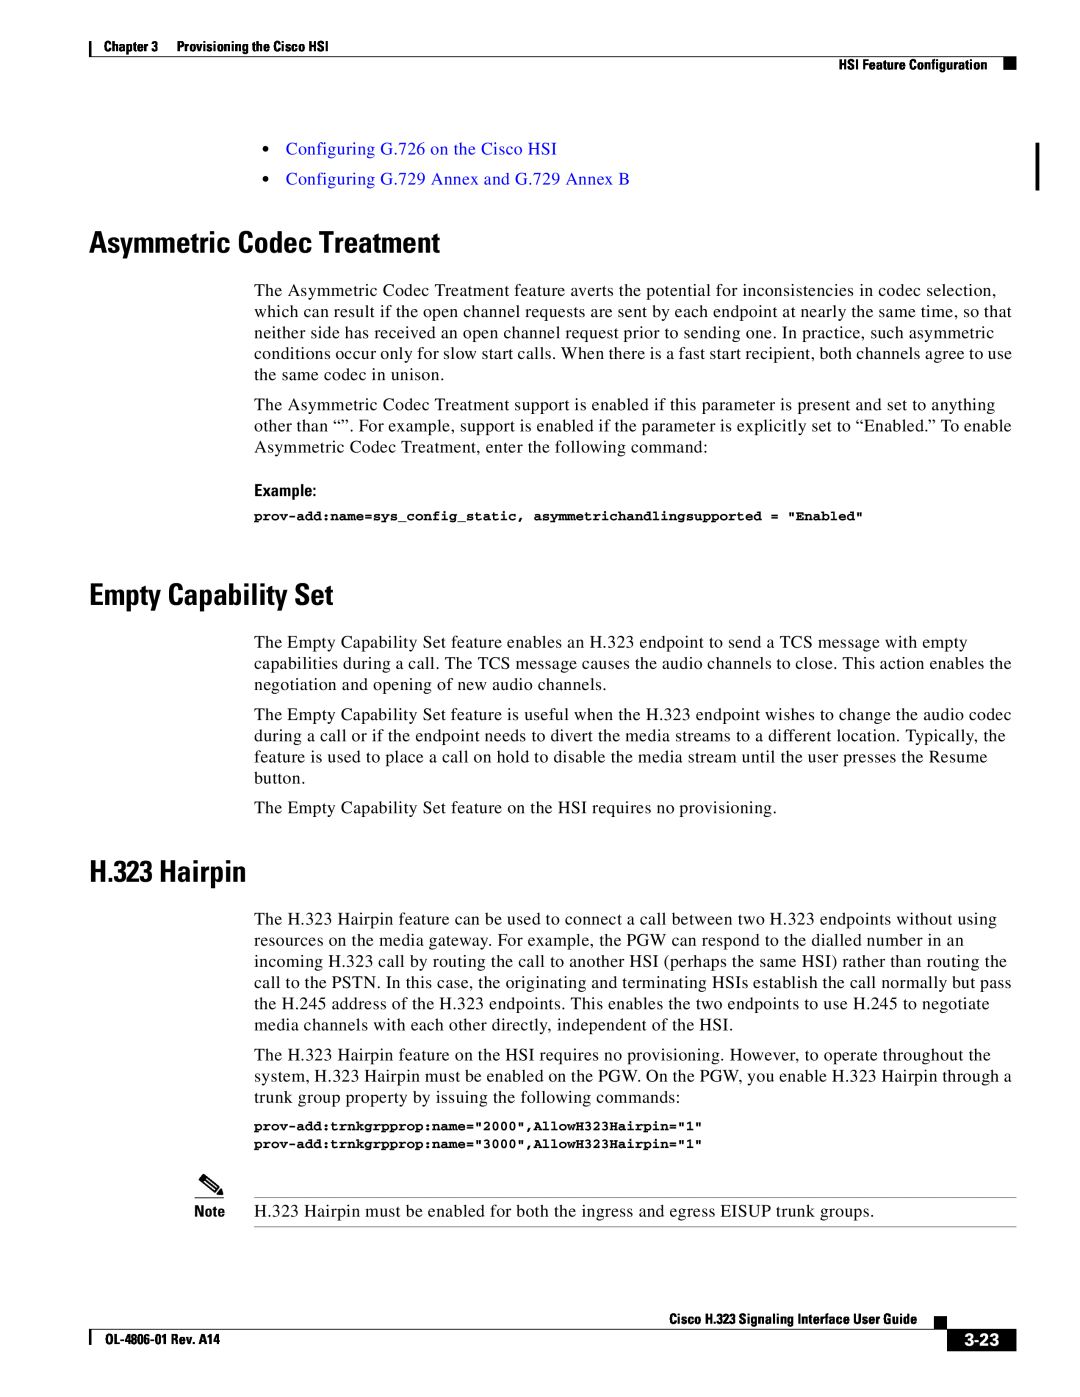 Cisco Systems Asymmetric Codec Treatment, Empty Capability Set, H.323 Hairpin, Configuring G.726 on the Cisco HSI, 3-23 